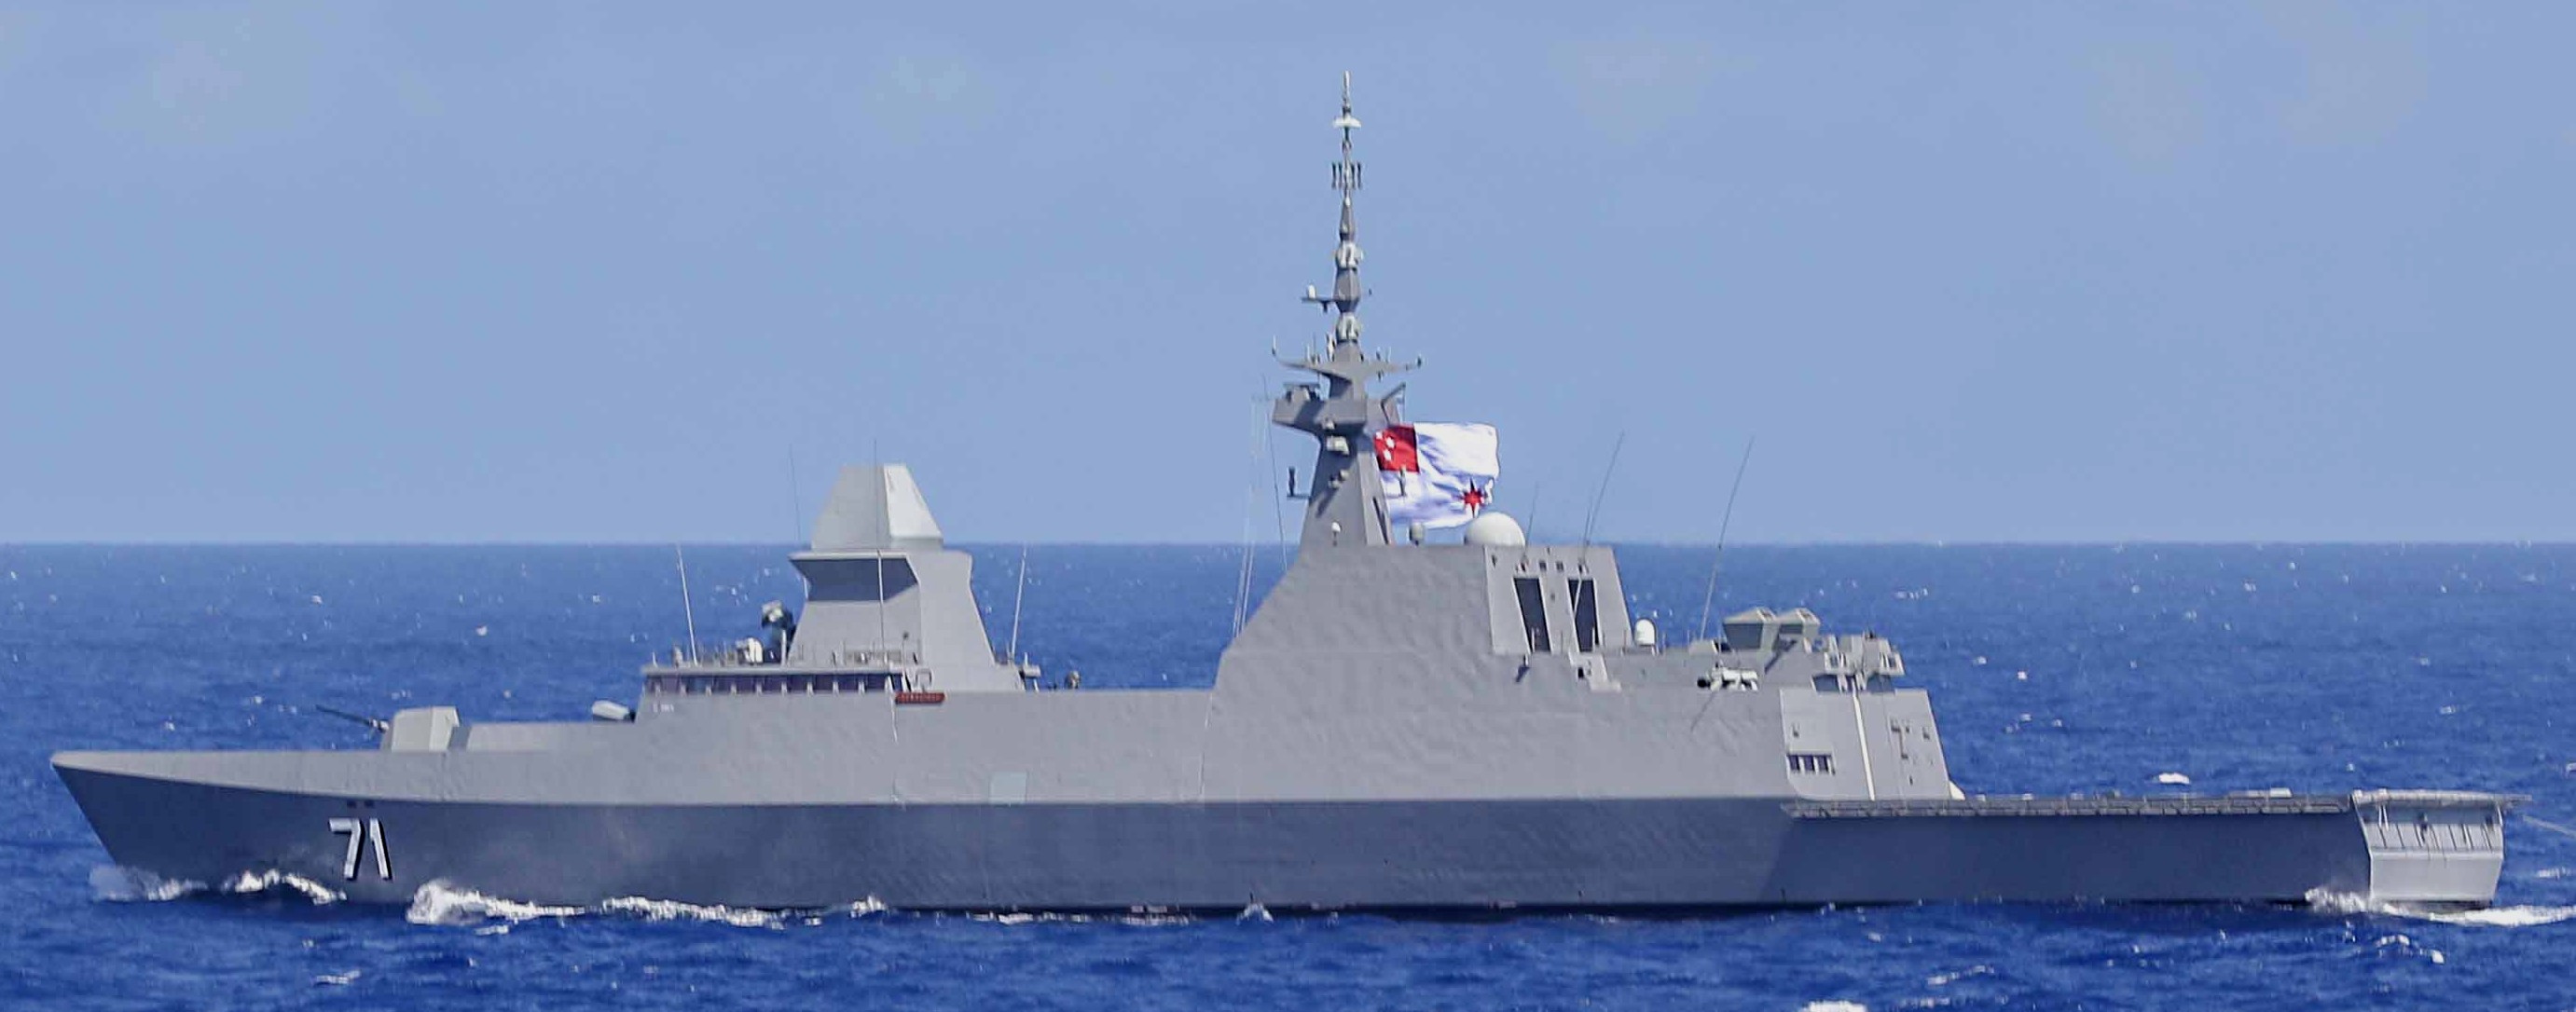 71 rss tenacious formidable class multi-mission missile frigate ffg republic singapore navy 06